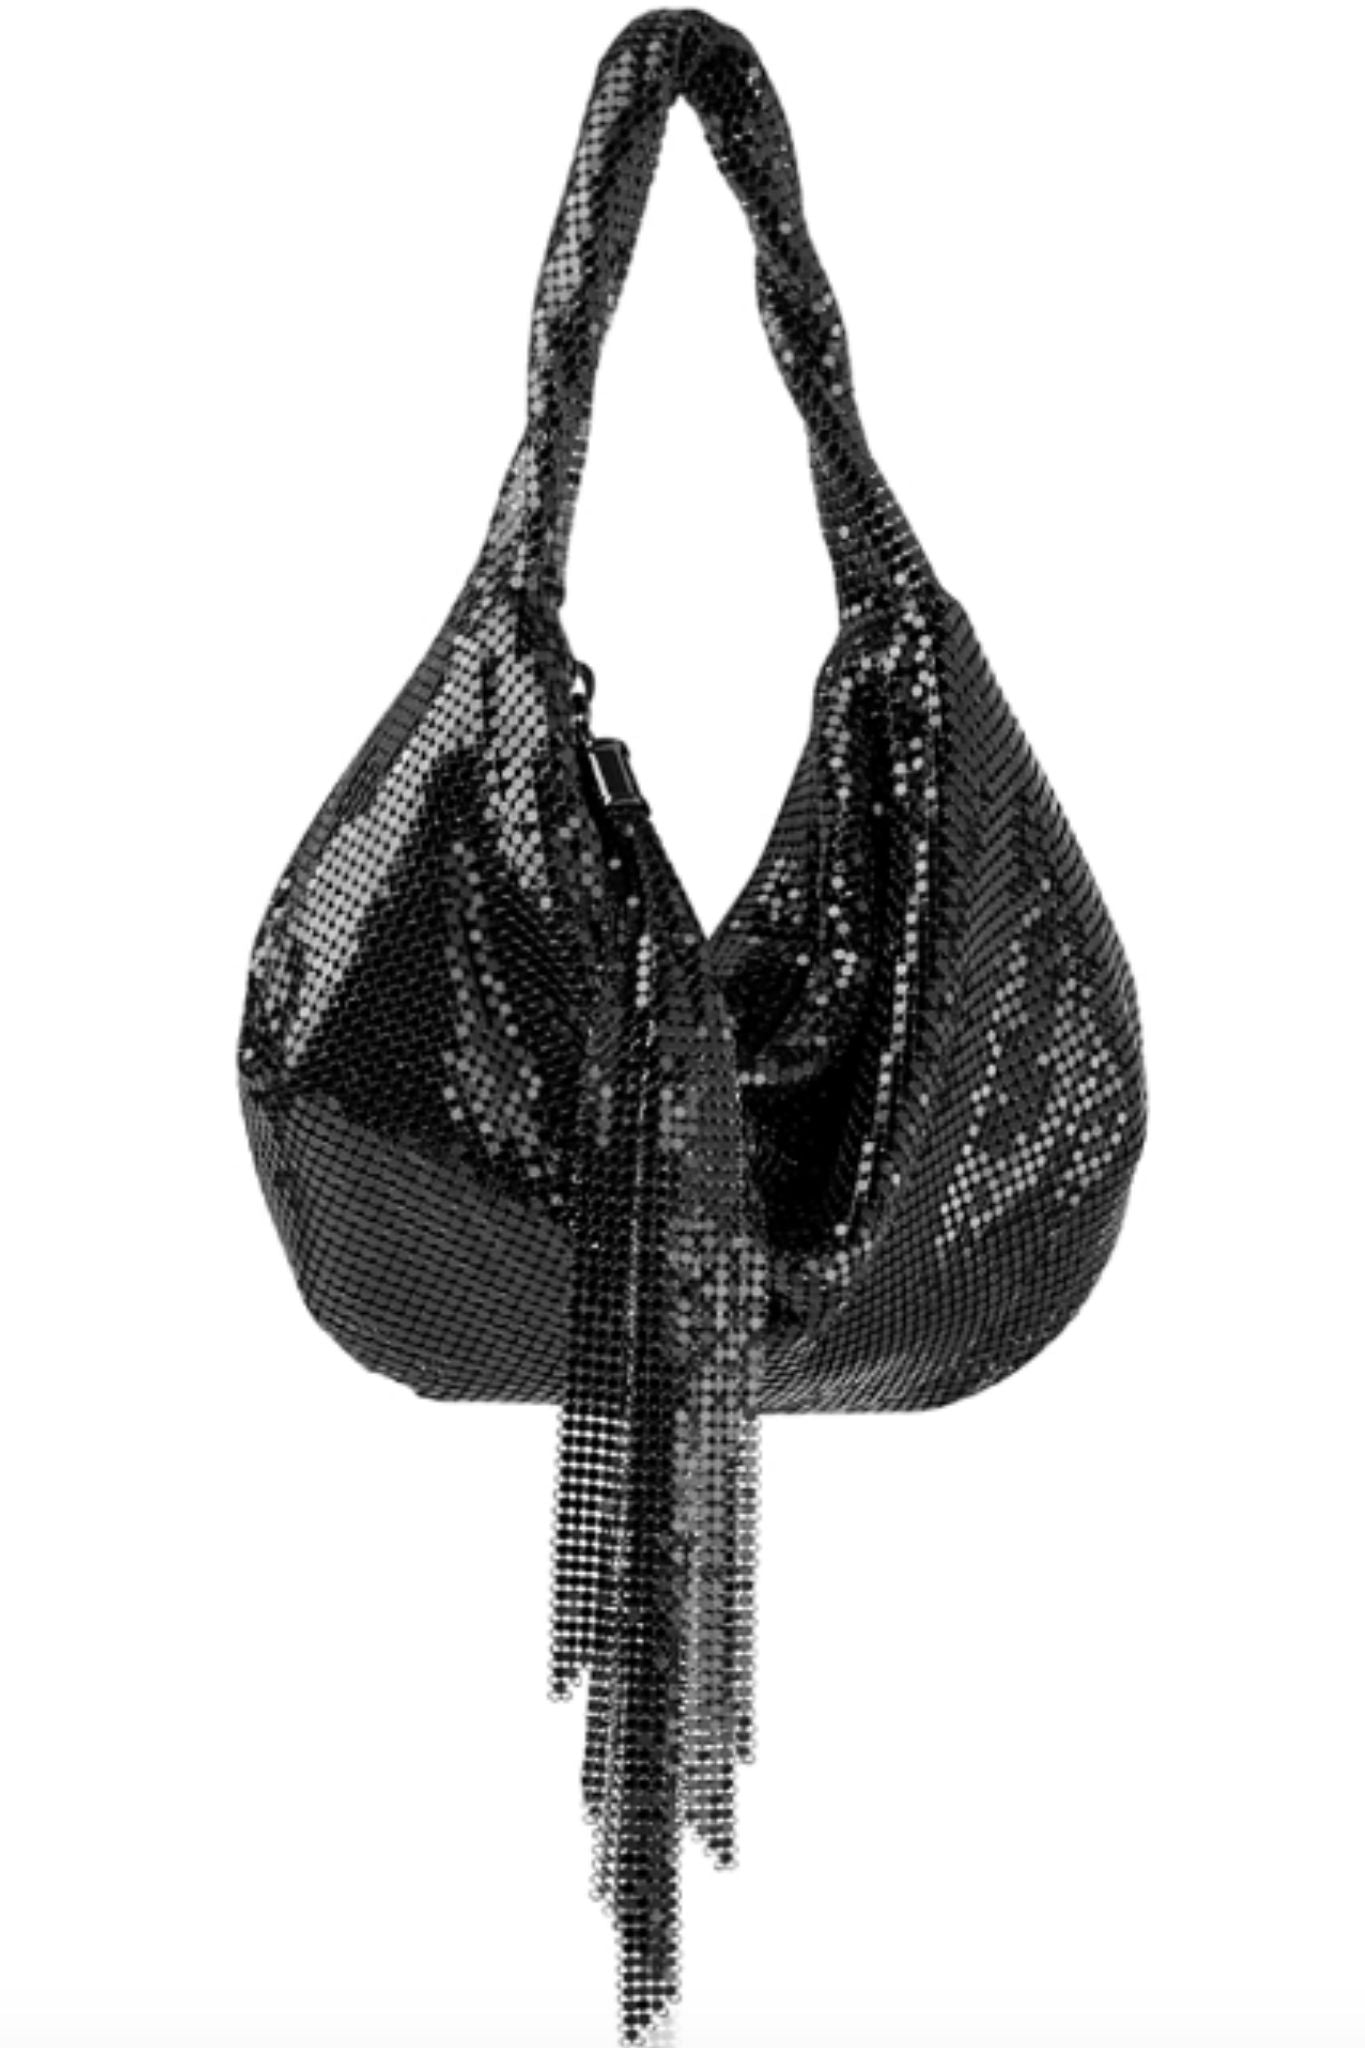 Marisol Mesh Hobo Bag in Black by Whiting and Davis - RENTAL